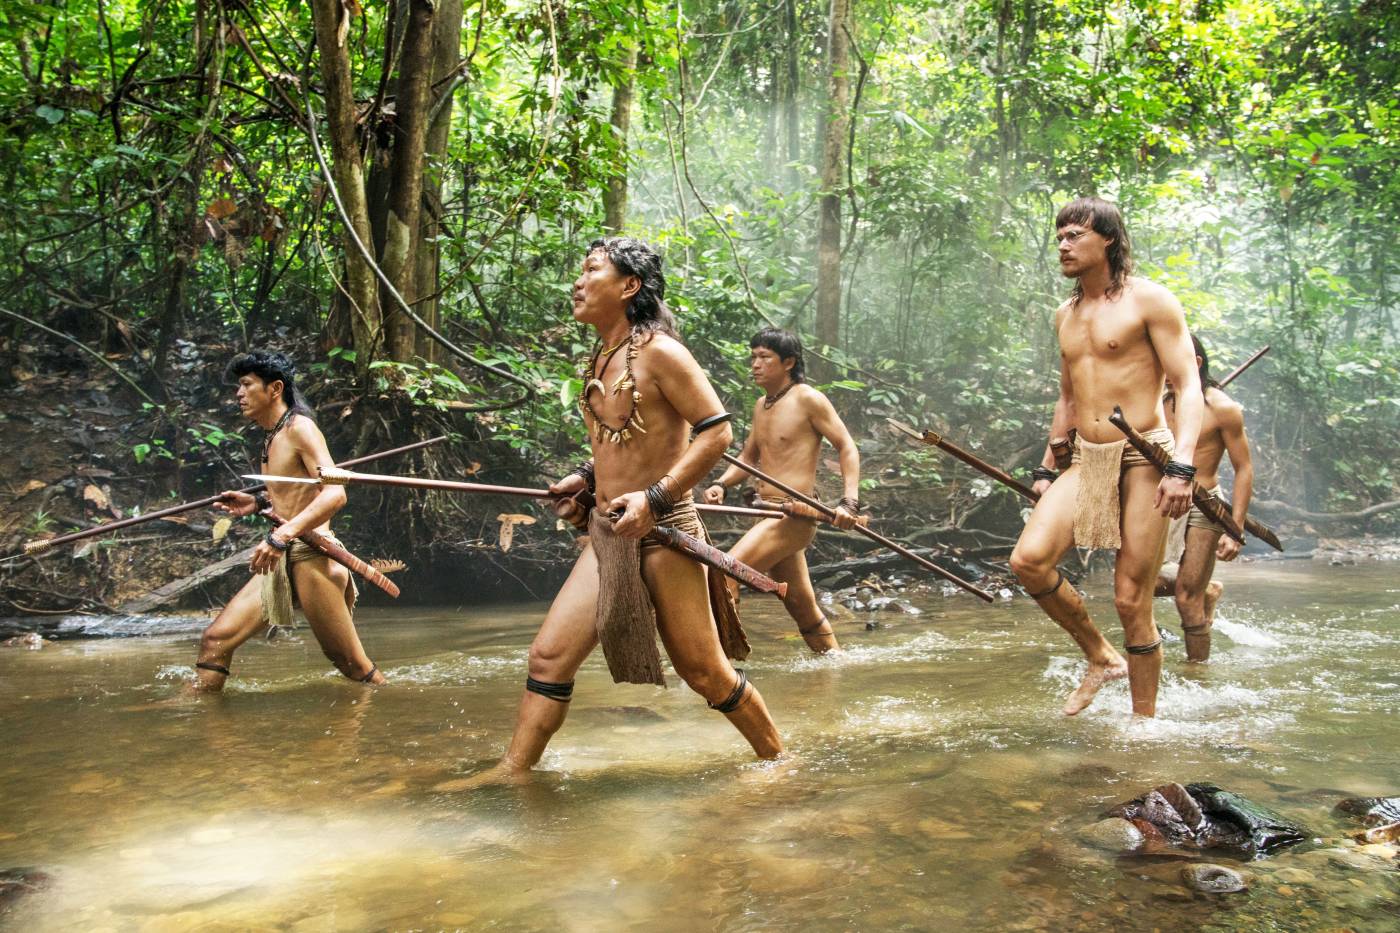 Resisting the loggers: Swiss explorer film spotlights threatened Malaysian tribe